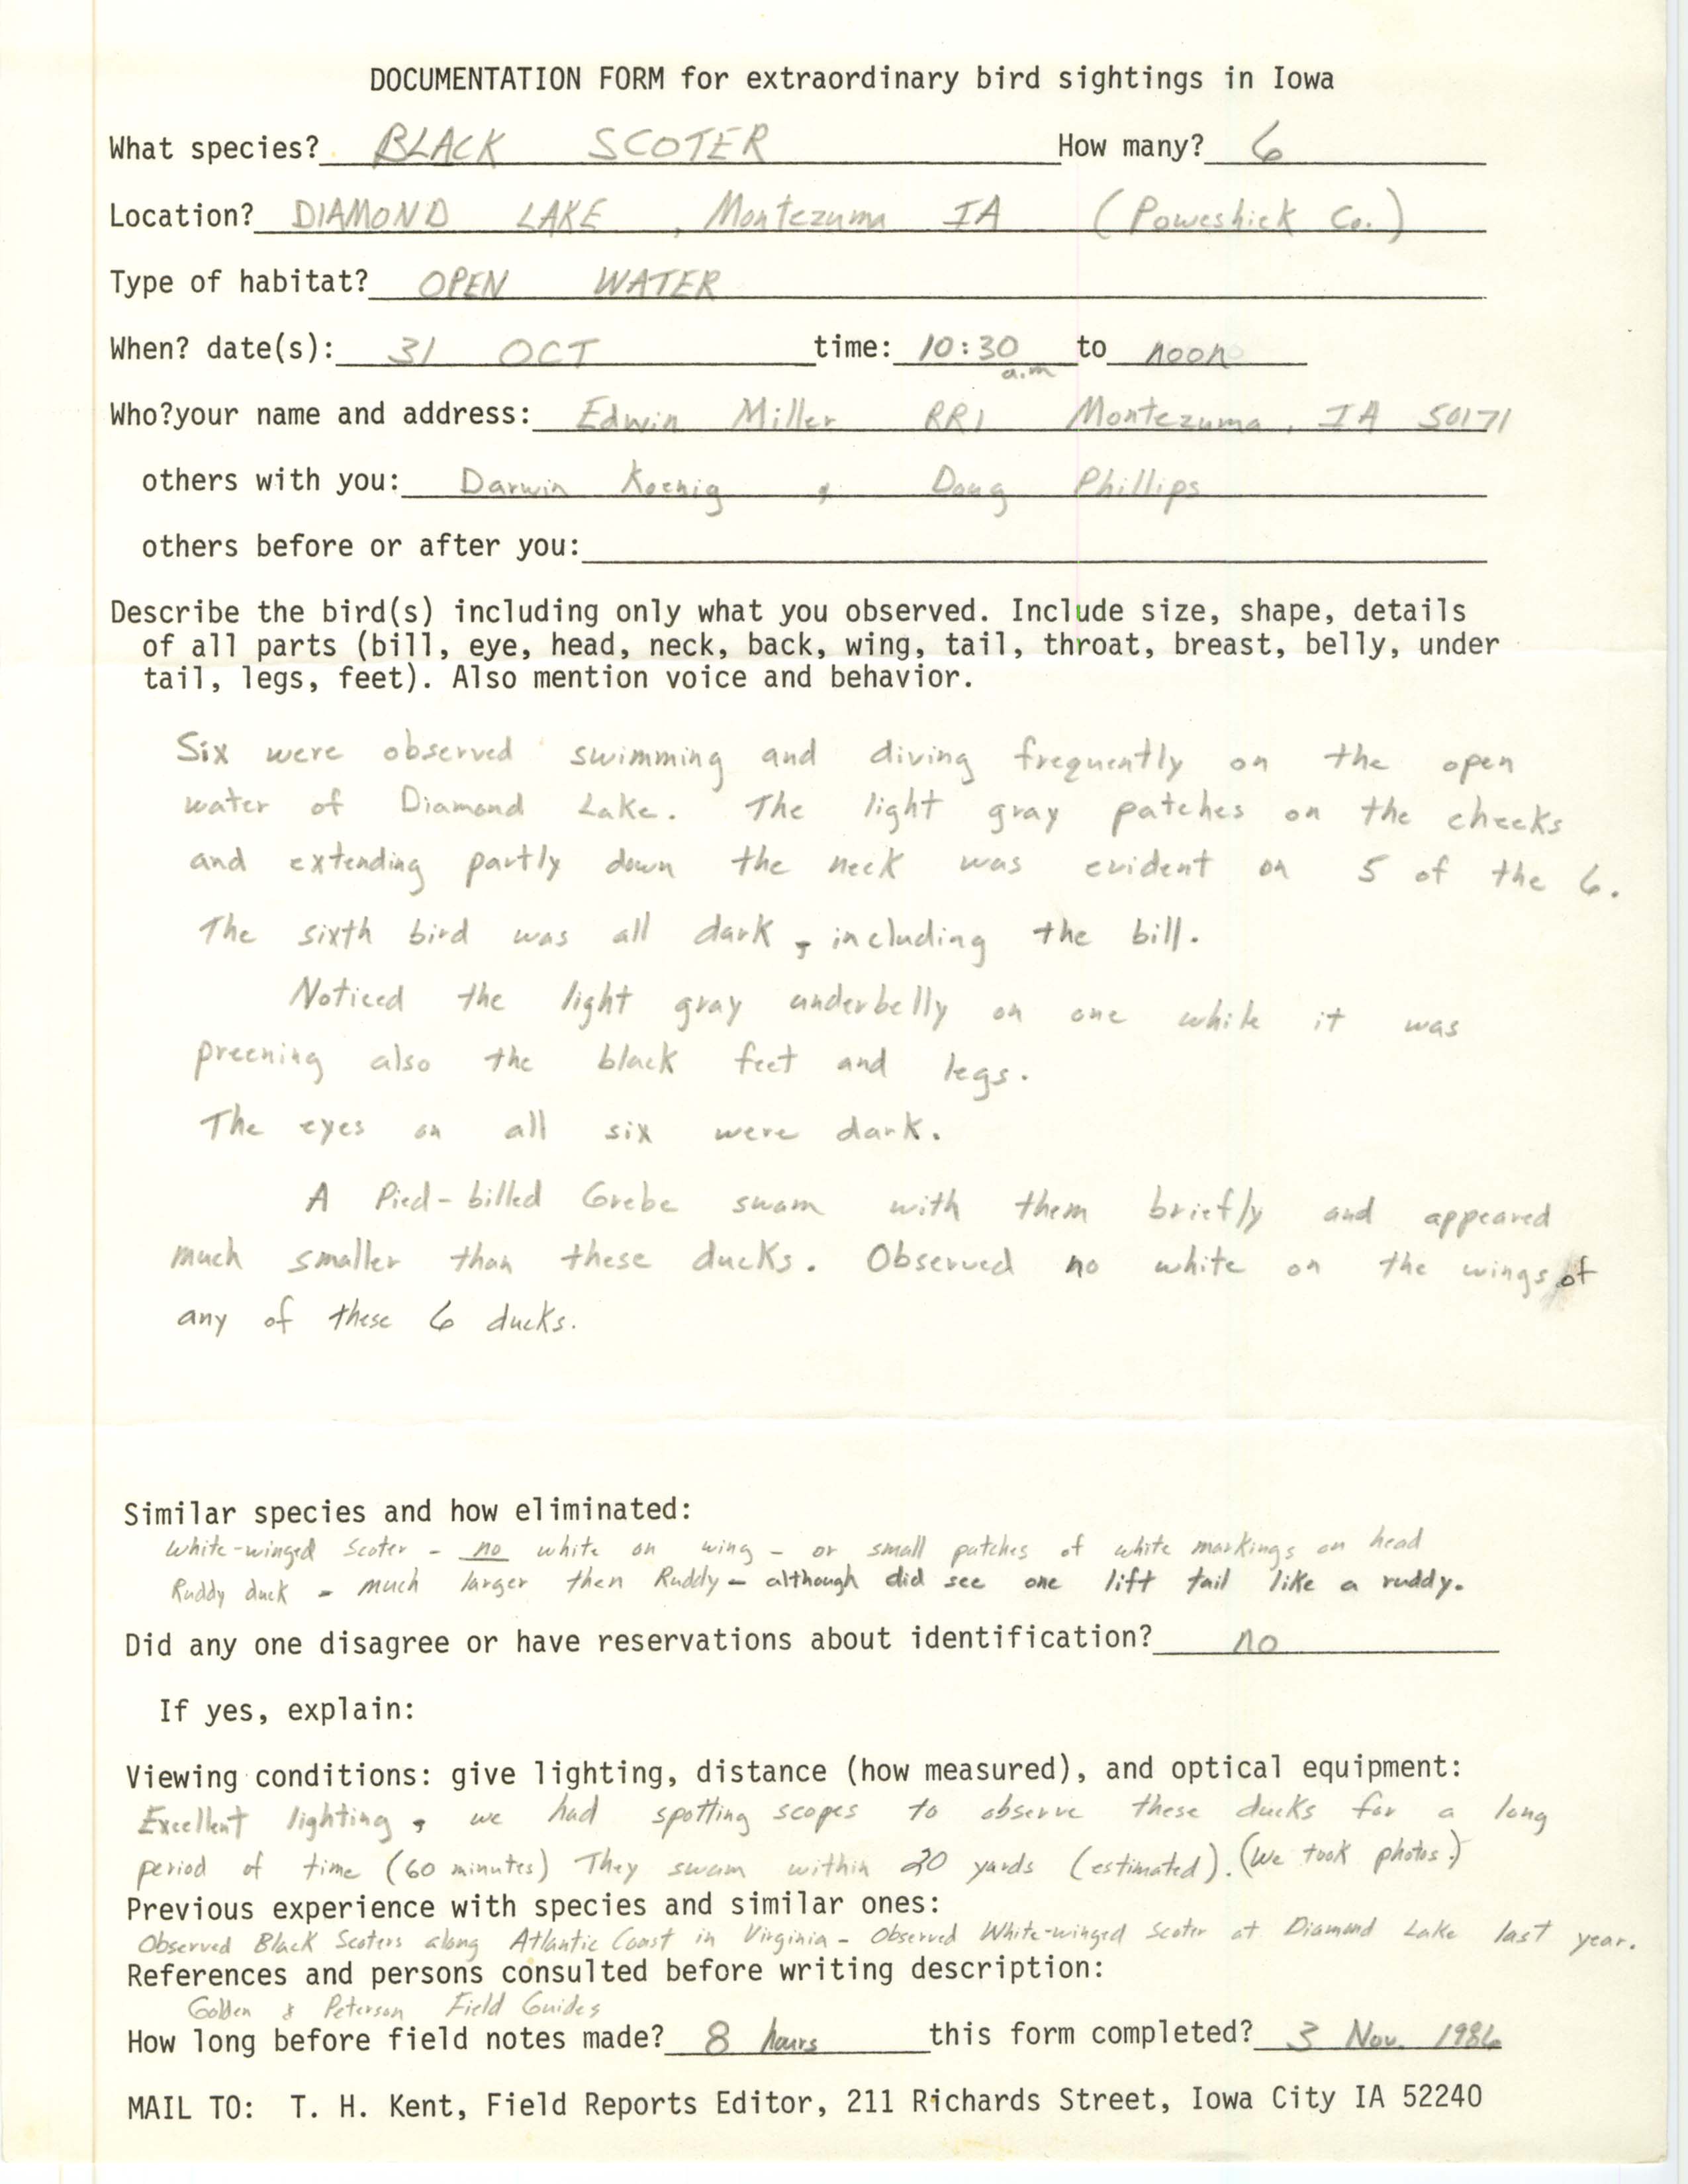 Rare bird documentation form for Black Scoter at Diamond Lake, 1986